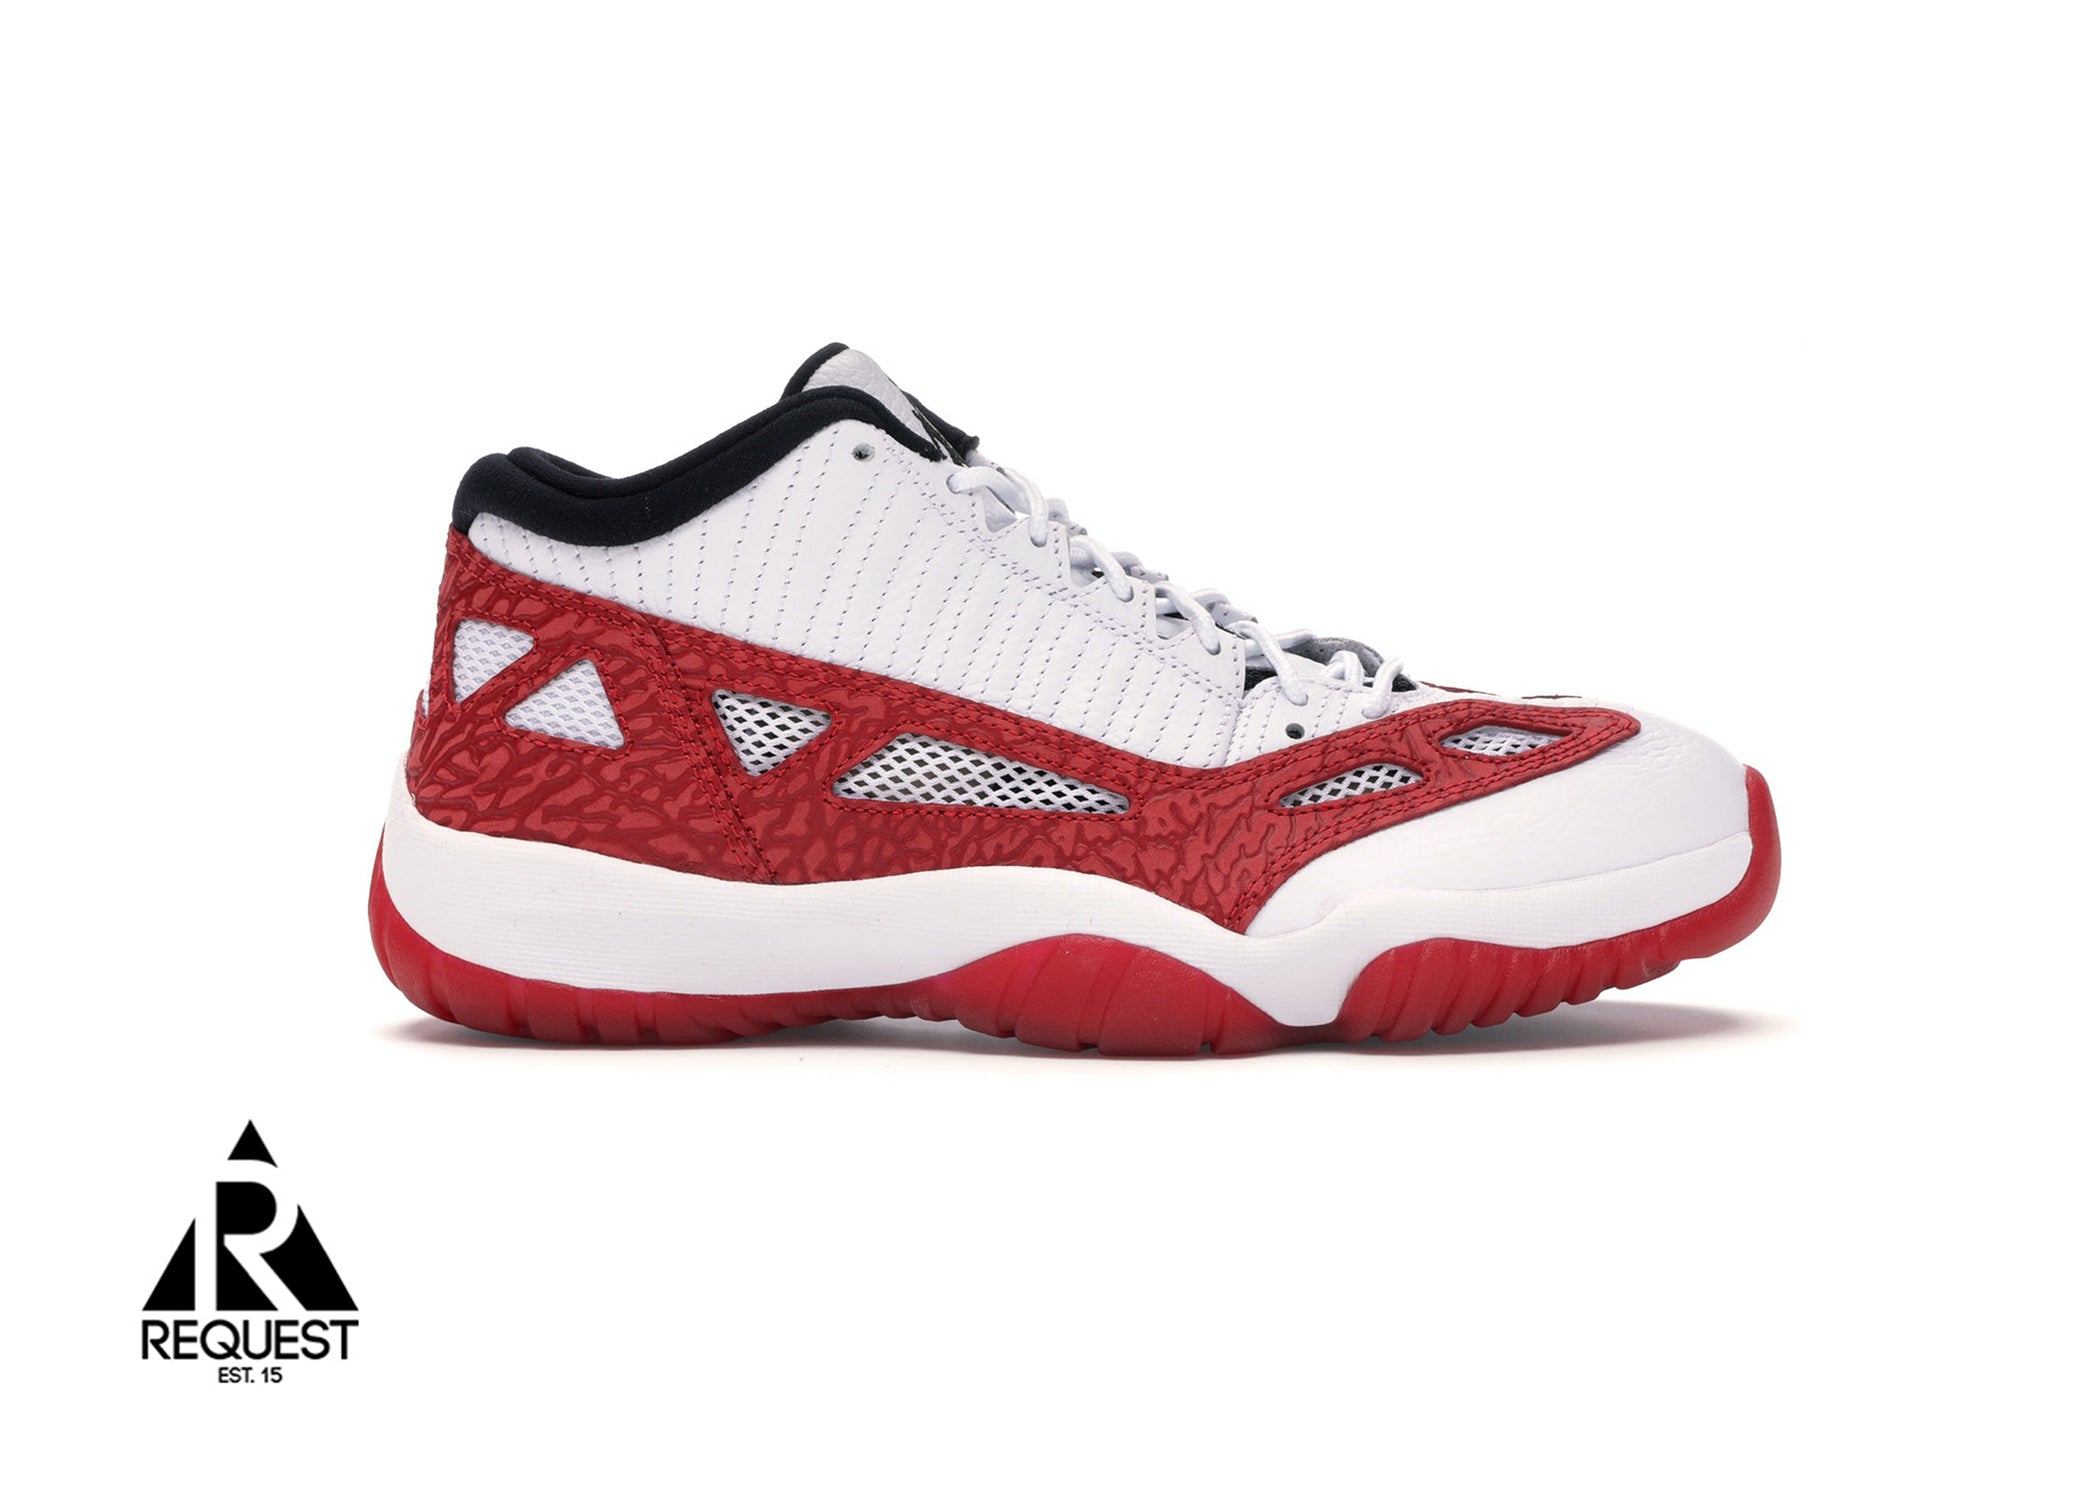 Air Jordan Retro 11 Low IE “Gym Red”